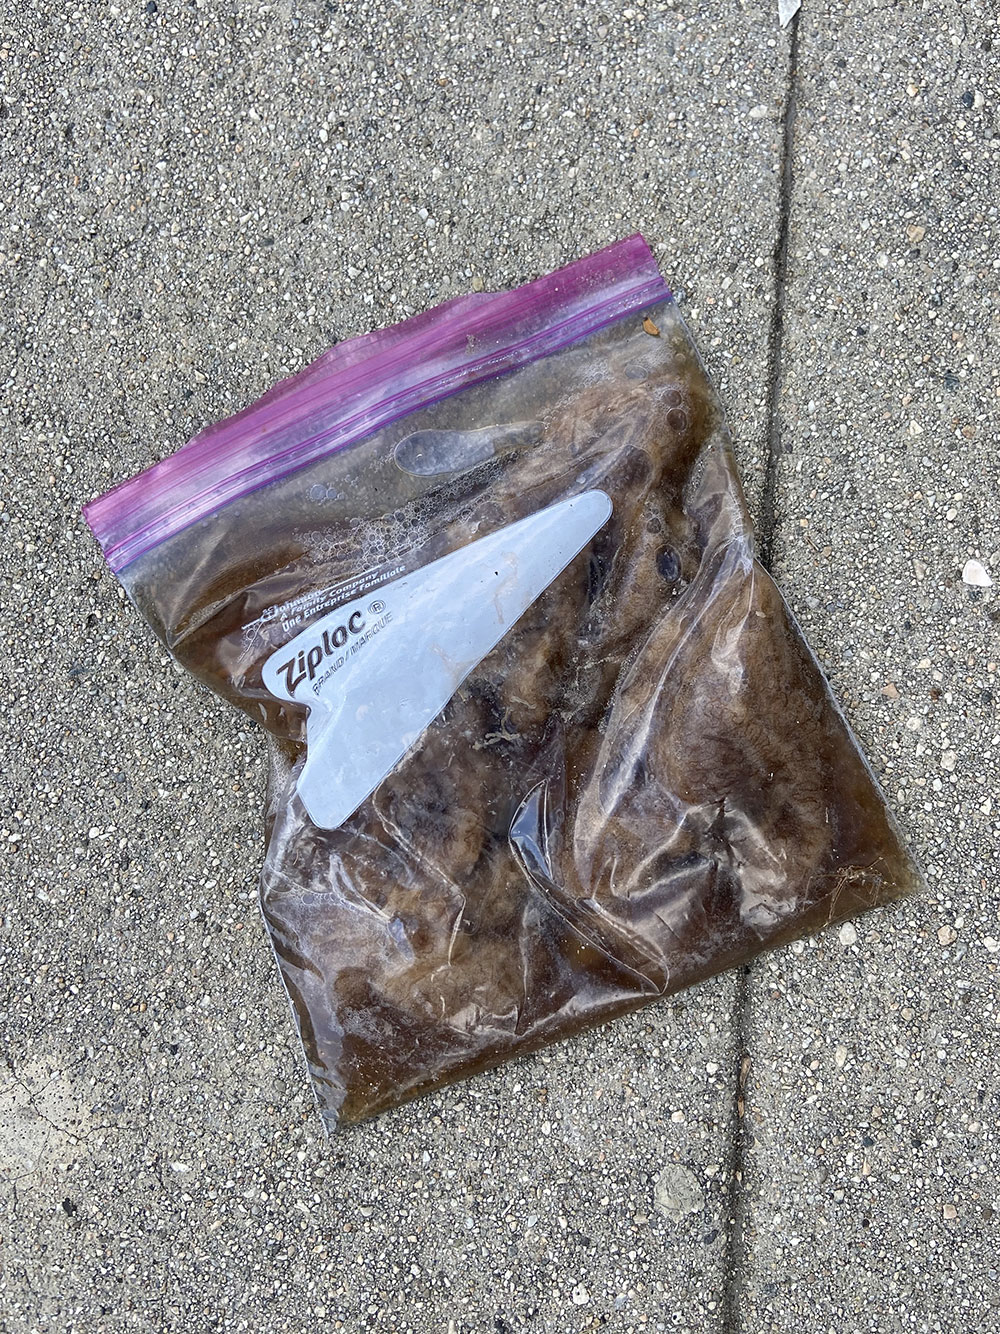 ziplock bag with mushy brown stuff inside, maybe bananas